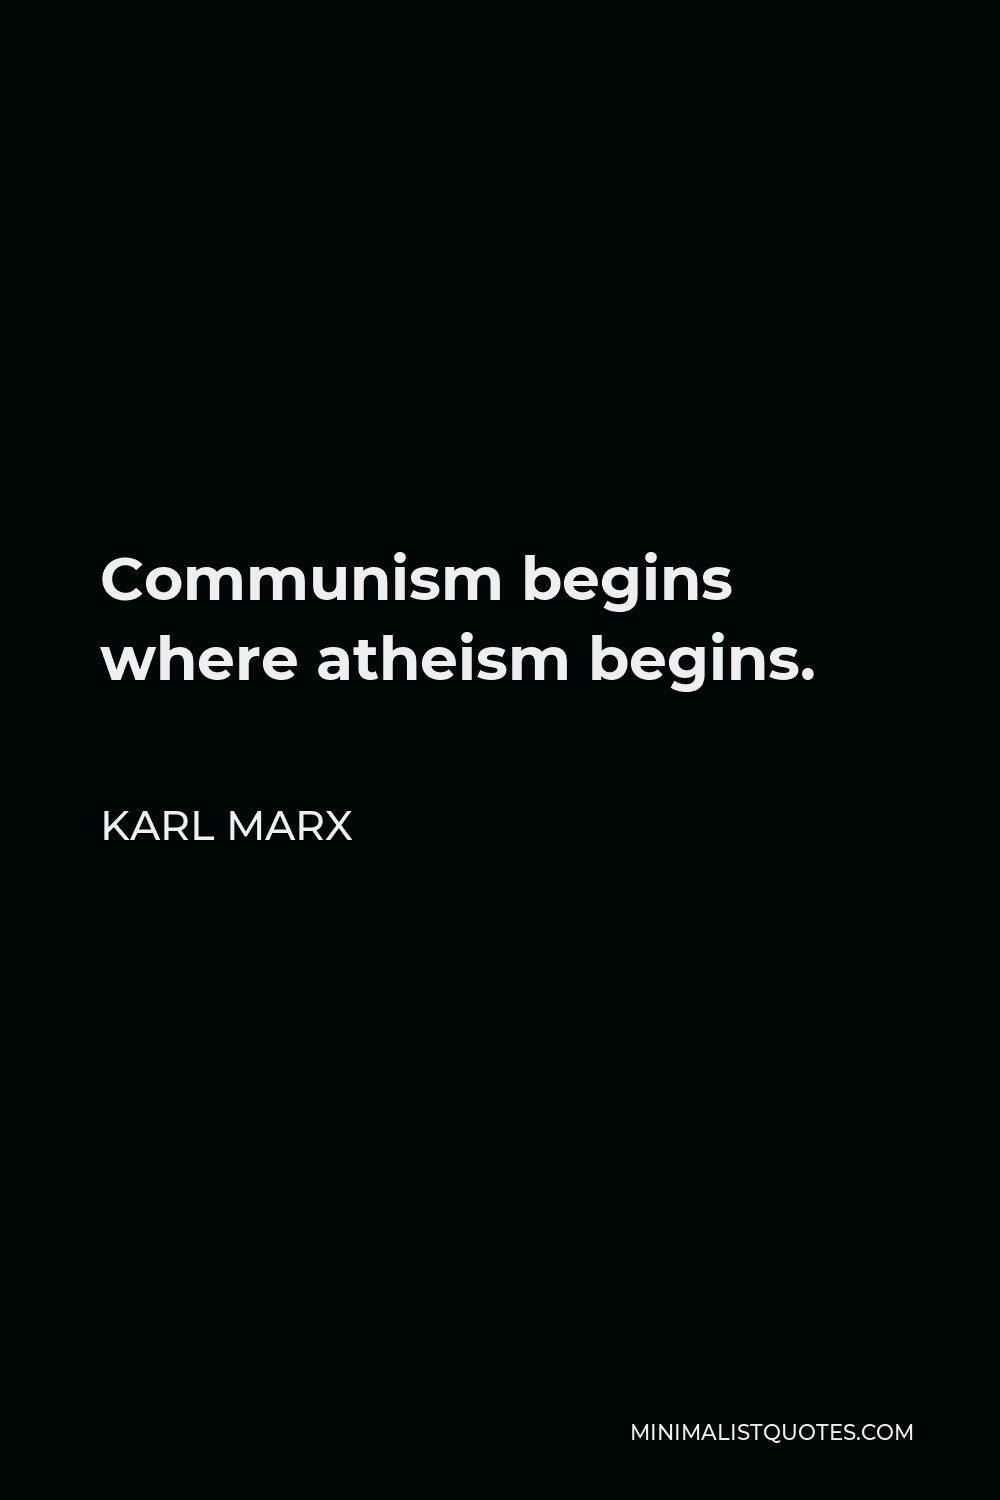 Karl Marx Quote - Communism begins where atheism begins.